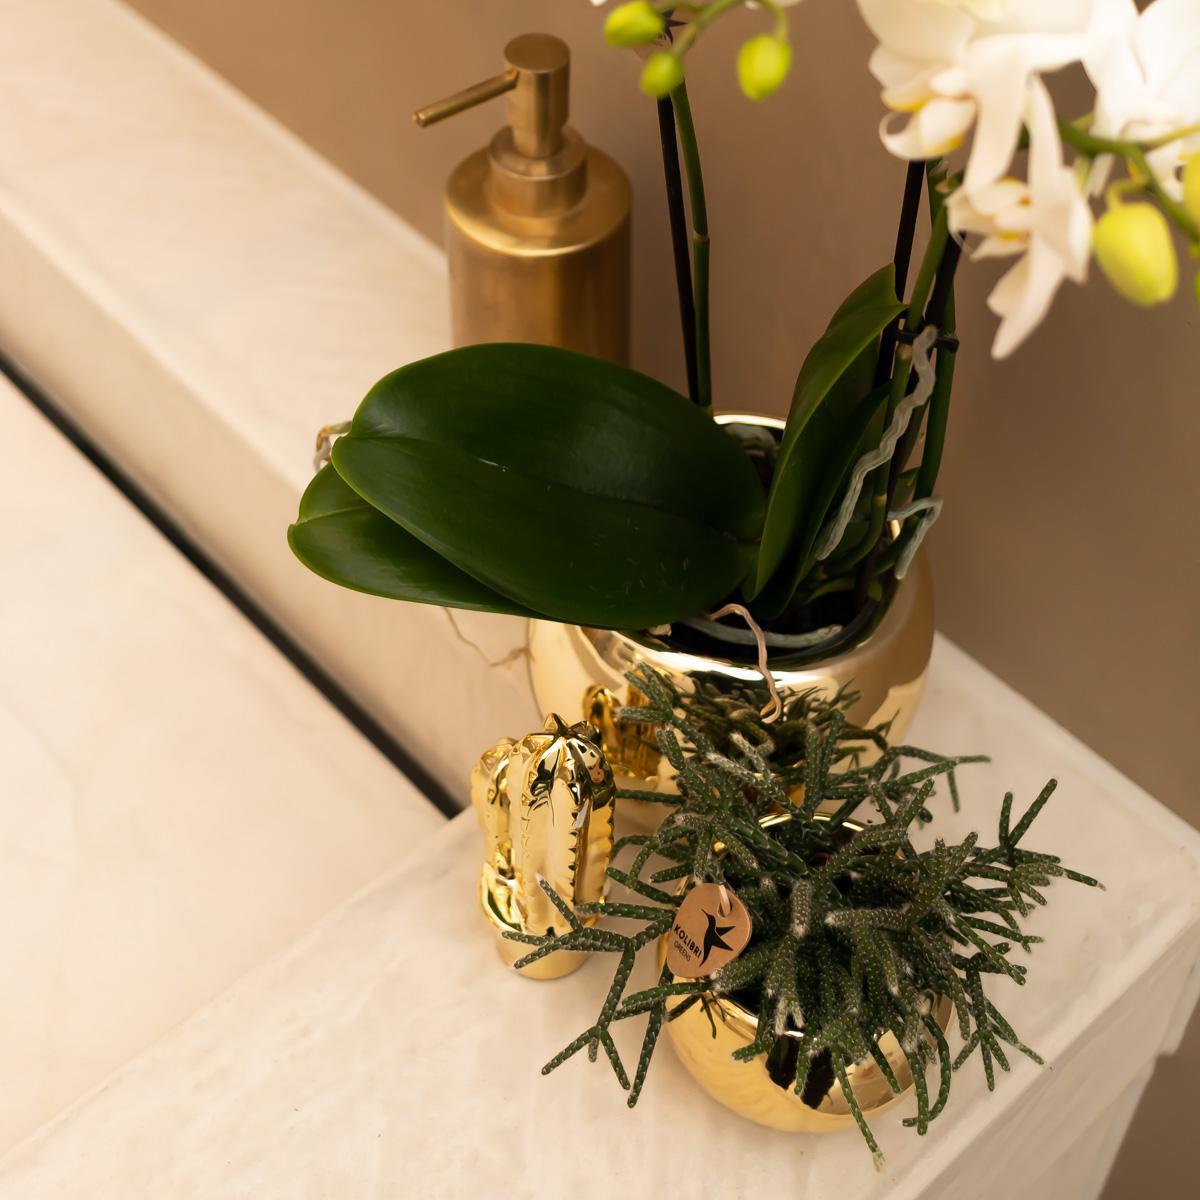 Kolibri Home | Ornament - Decoratie beeld Cactus - Gold